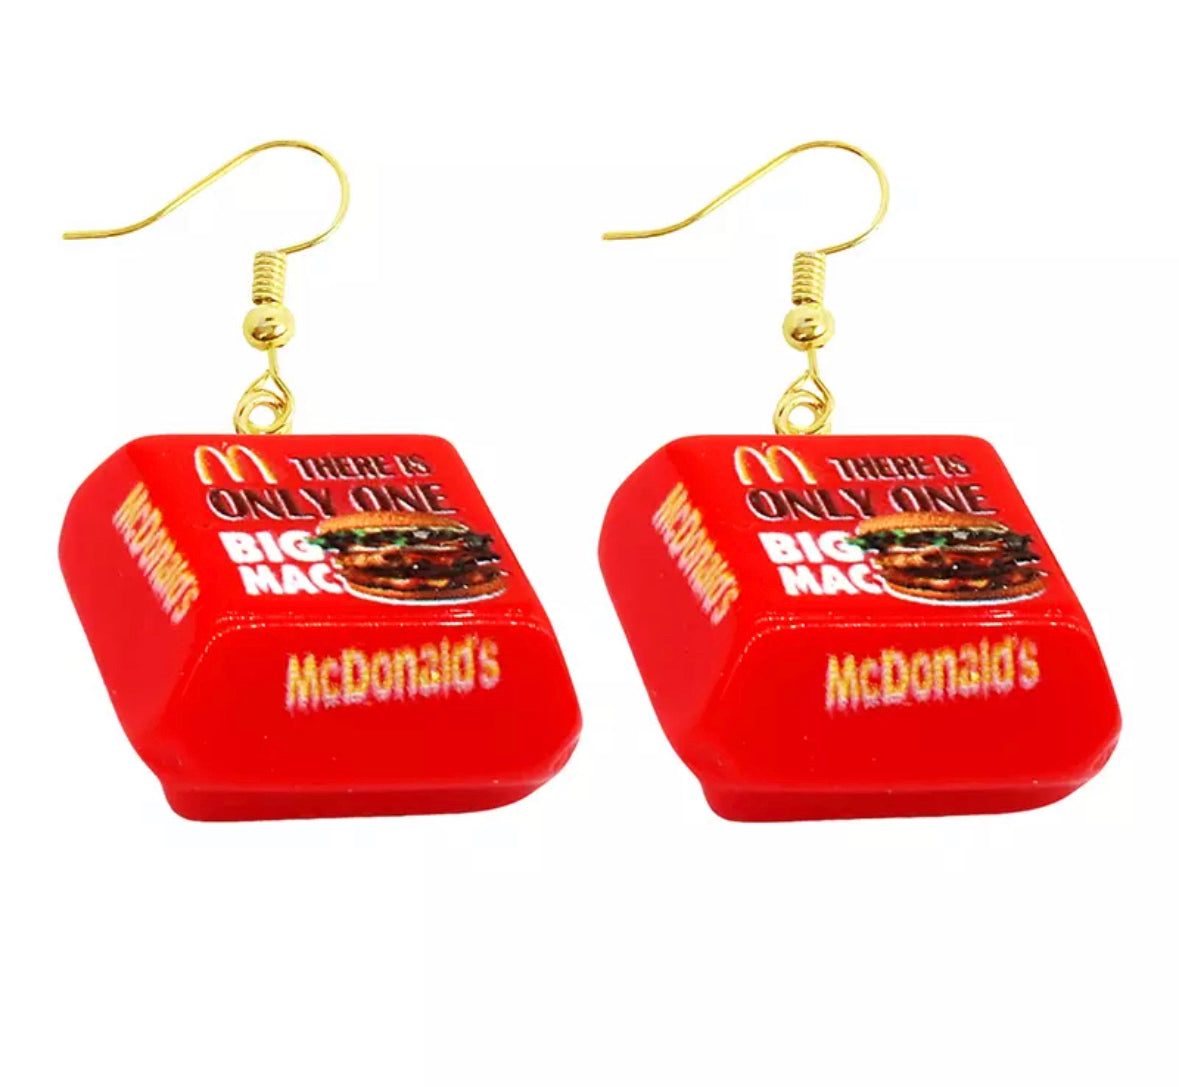 McD’s Big Mac